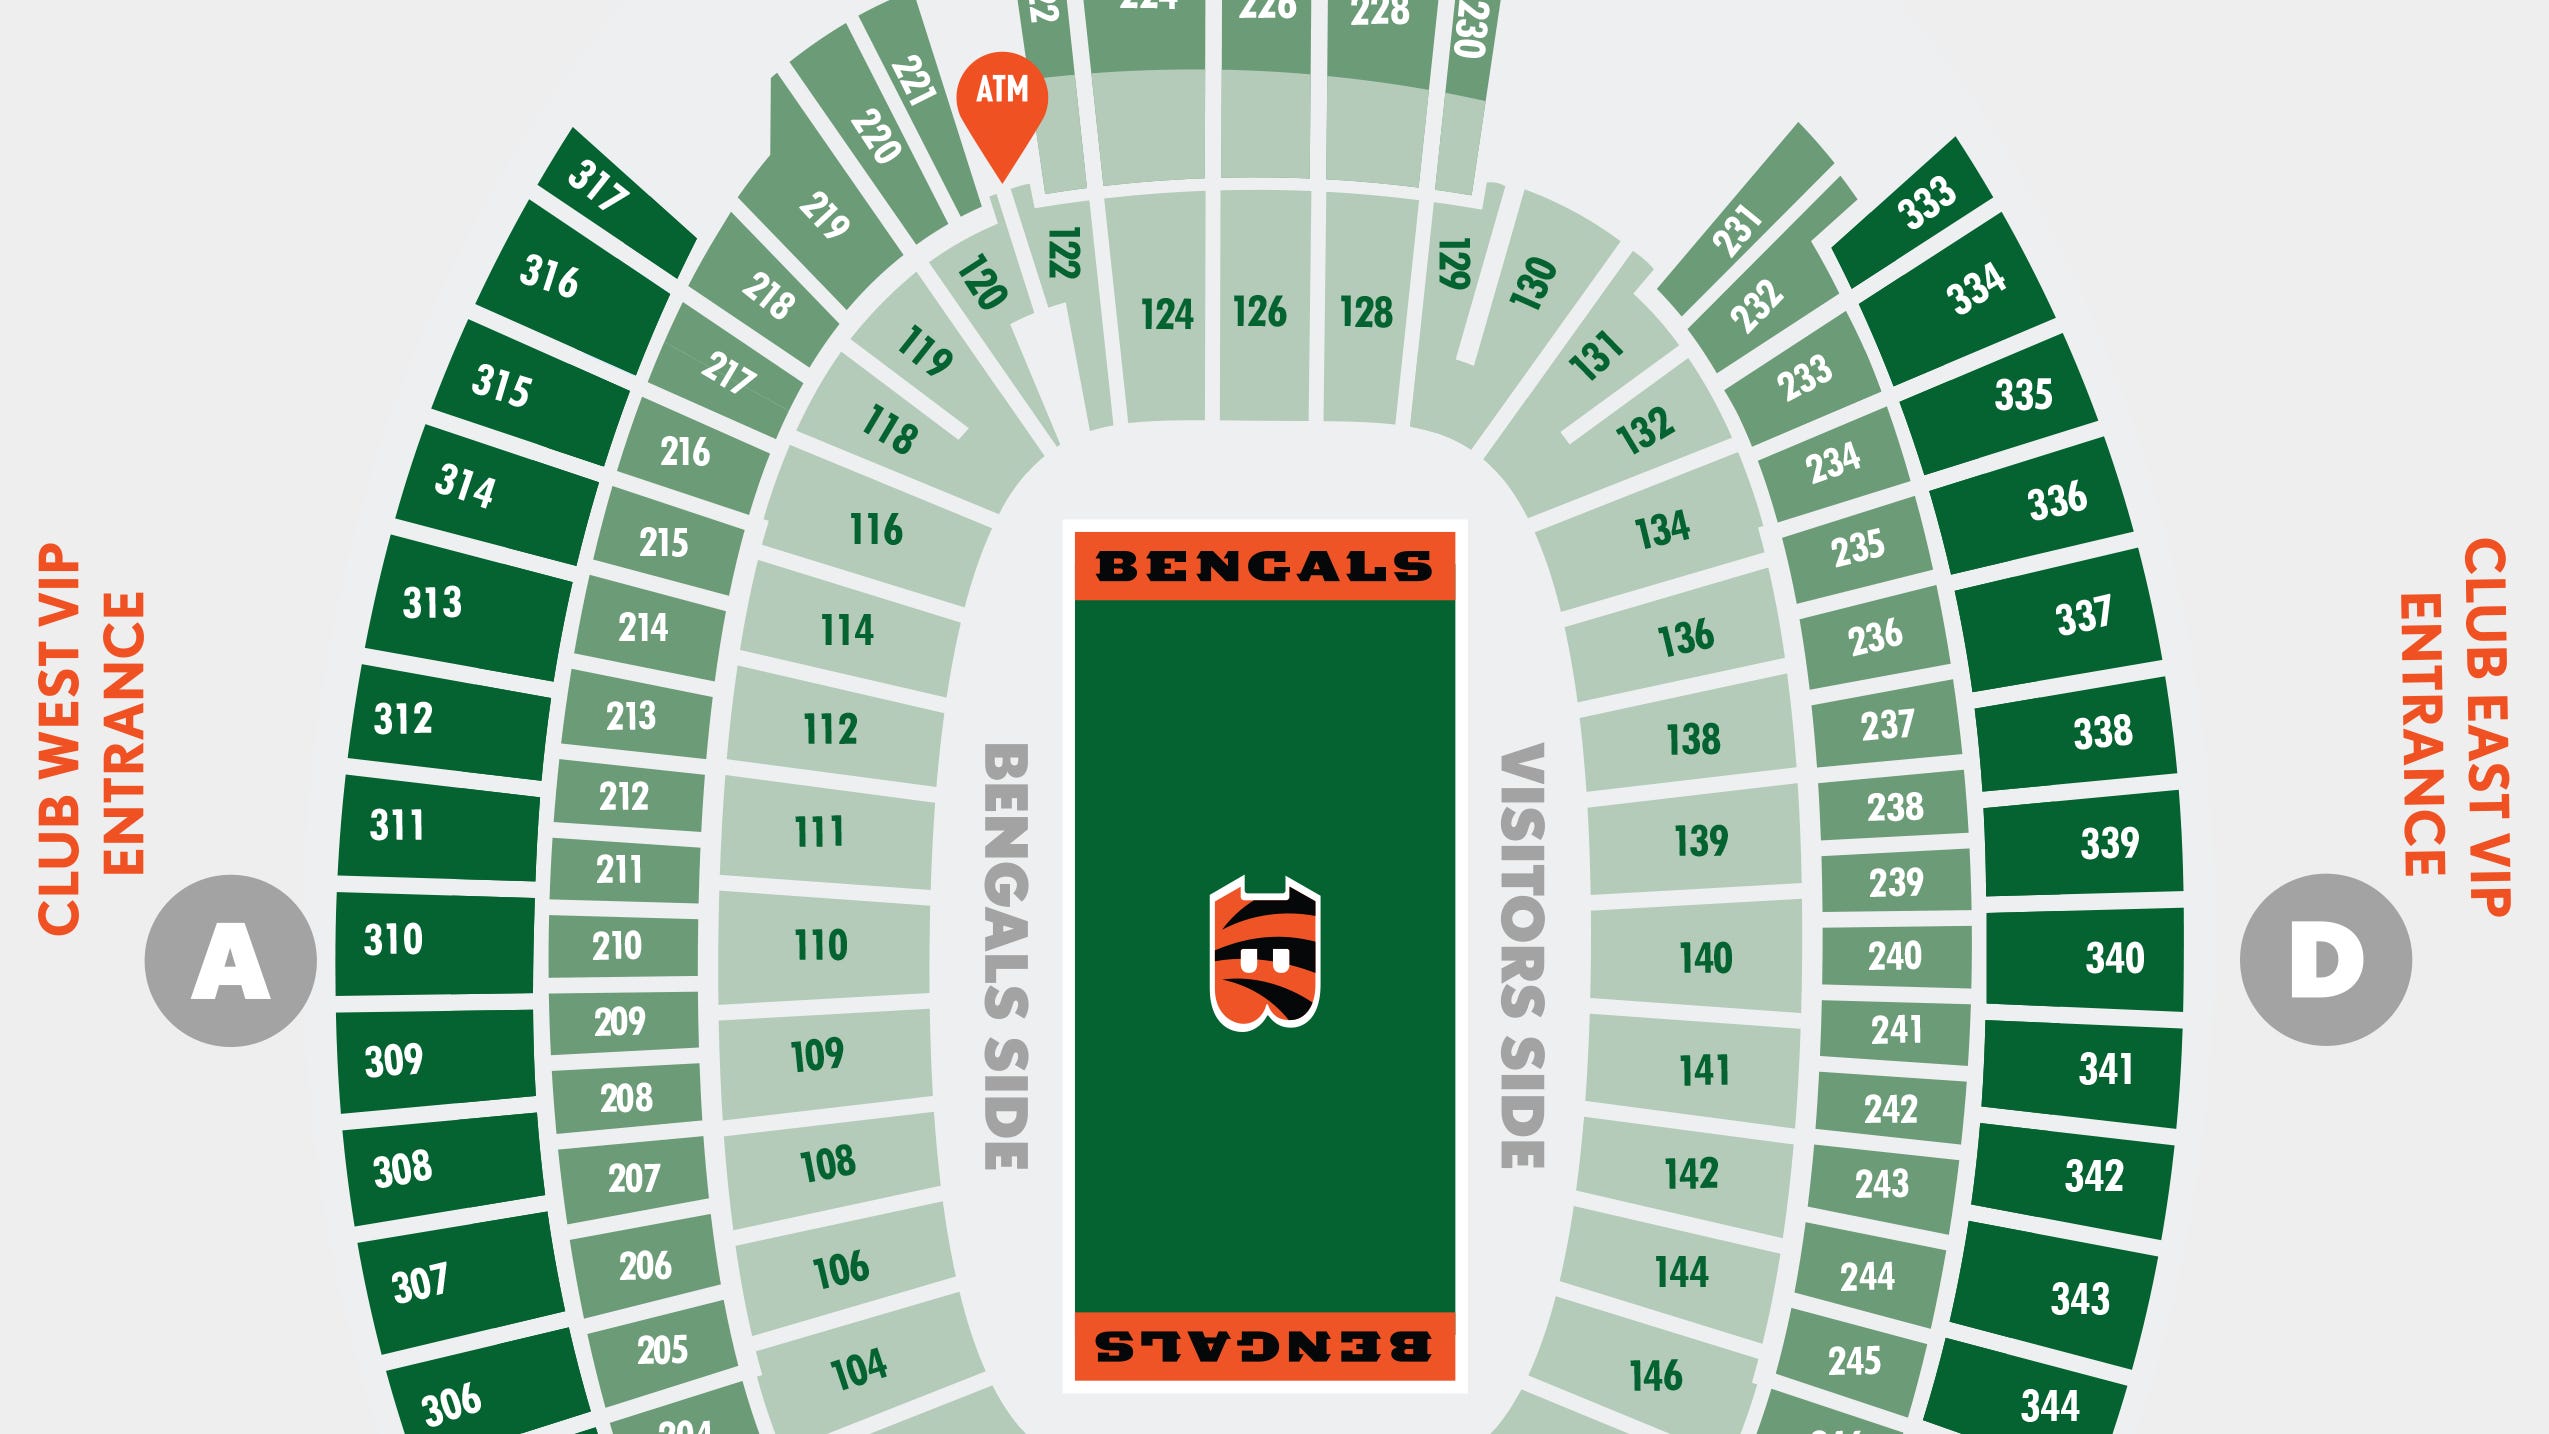 Cincinnati Bengals stadium seating chart, attendance numbers